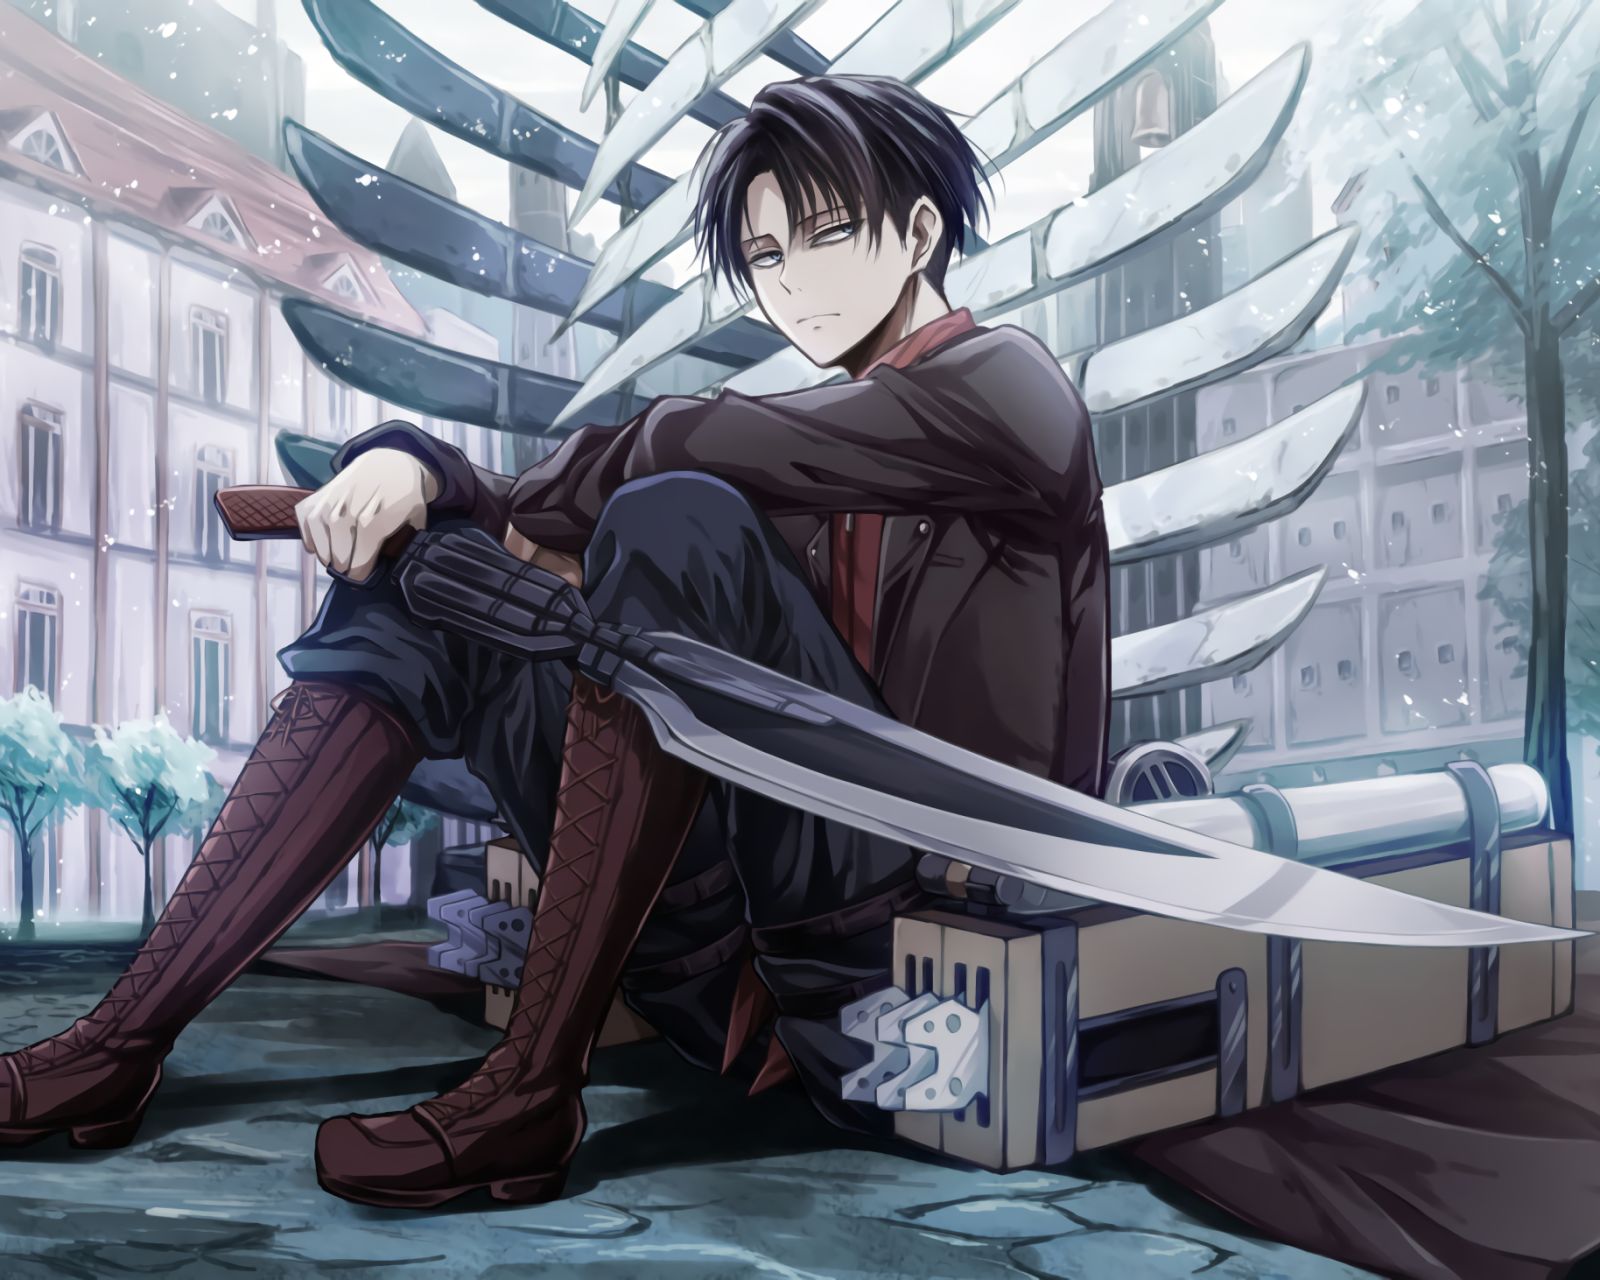 Shingeki no Kyojin Levi, black-haired man holding sword anime character png